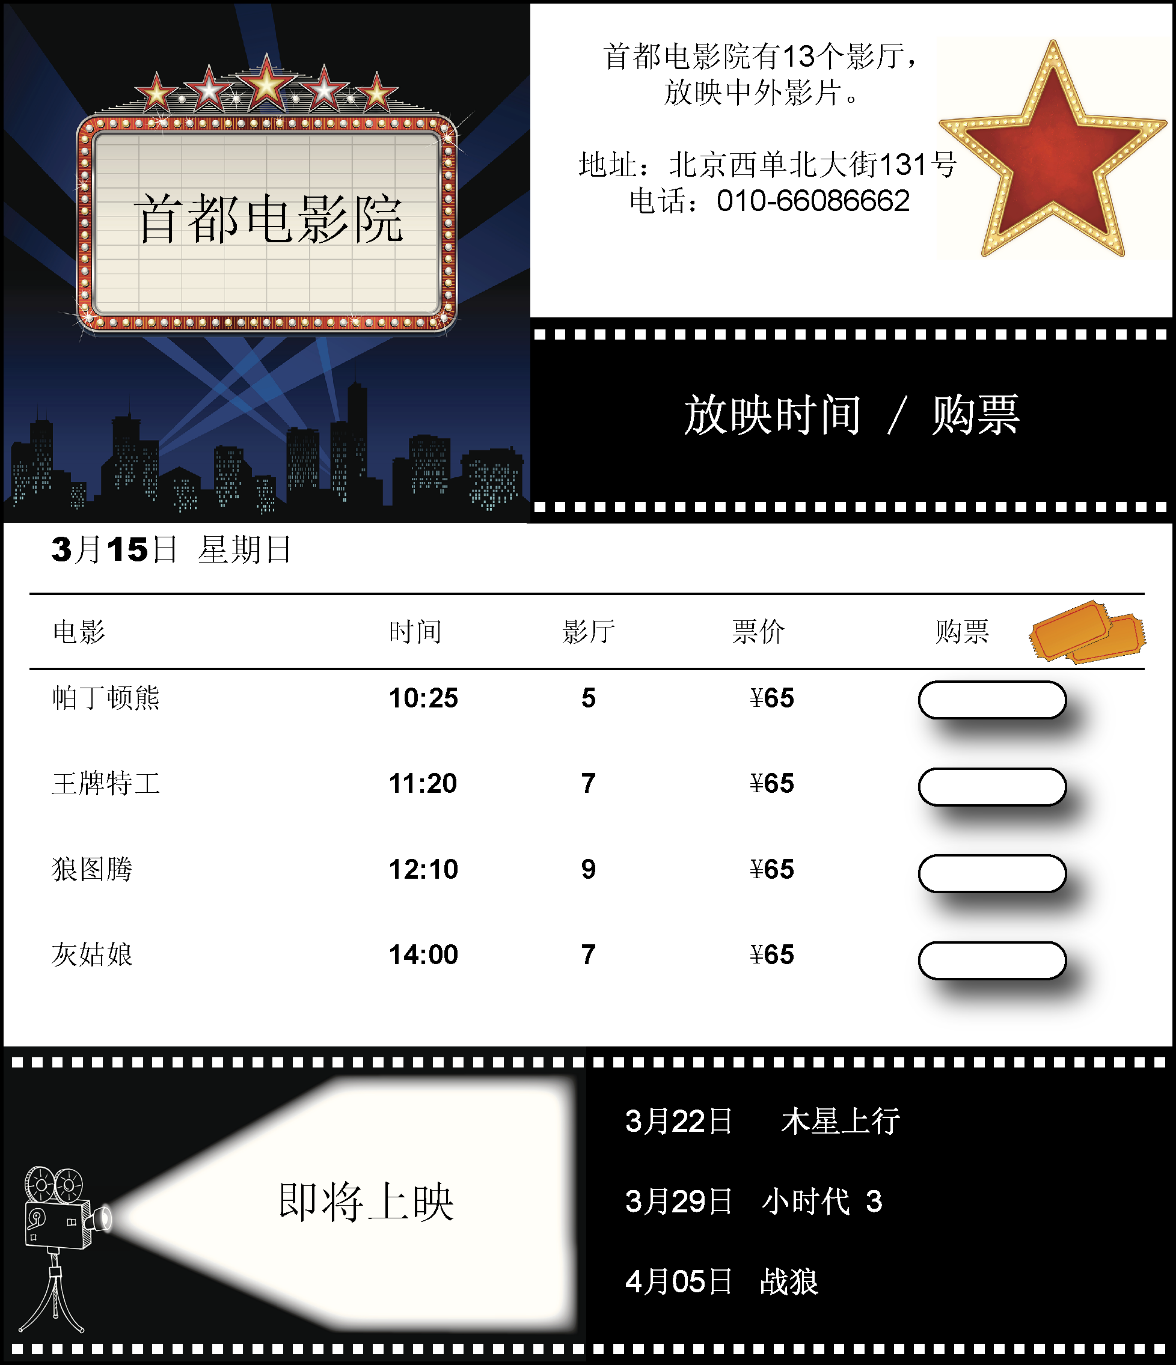 Exhibit - movie ticket advertisement in Mandarin (Simplified)